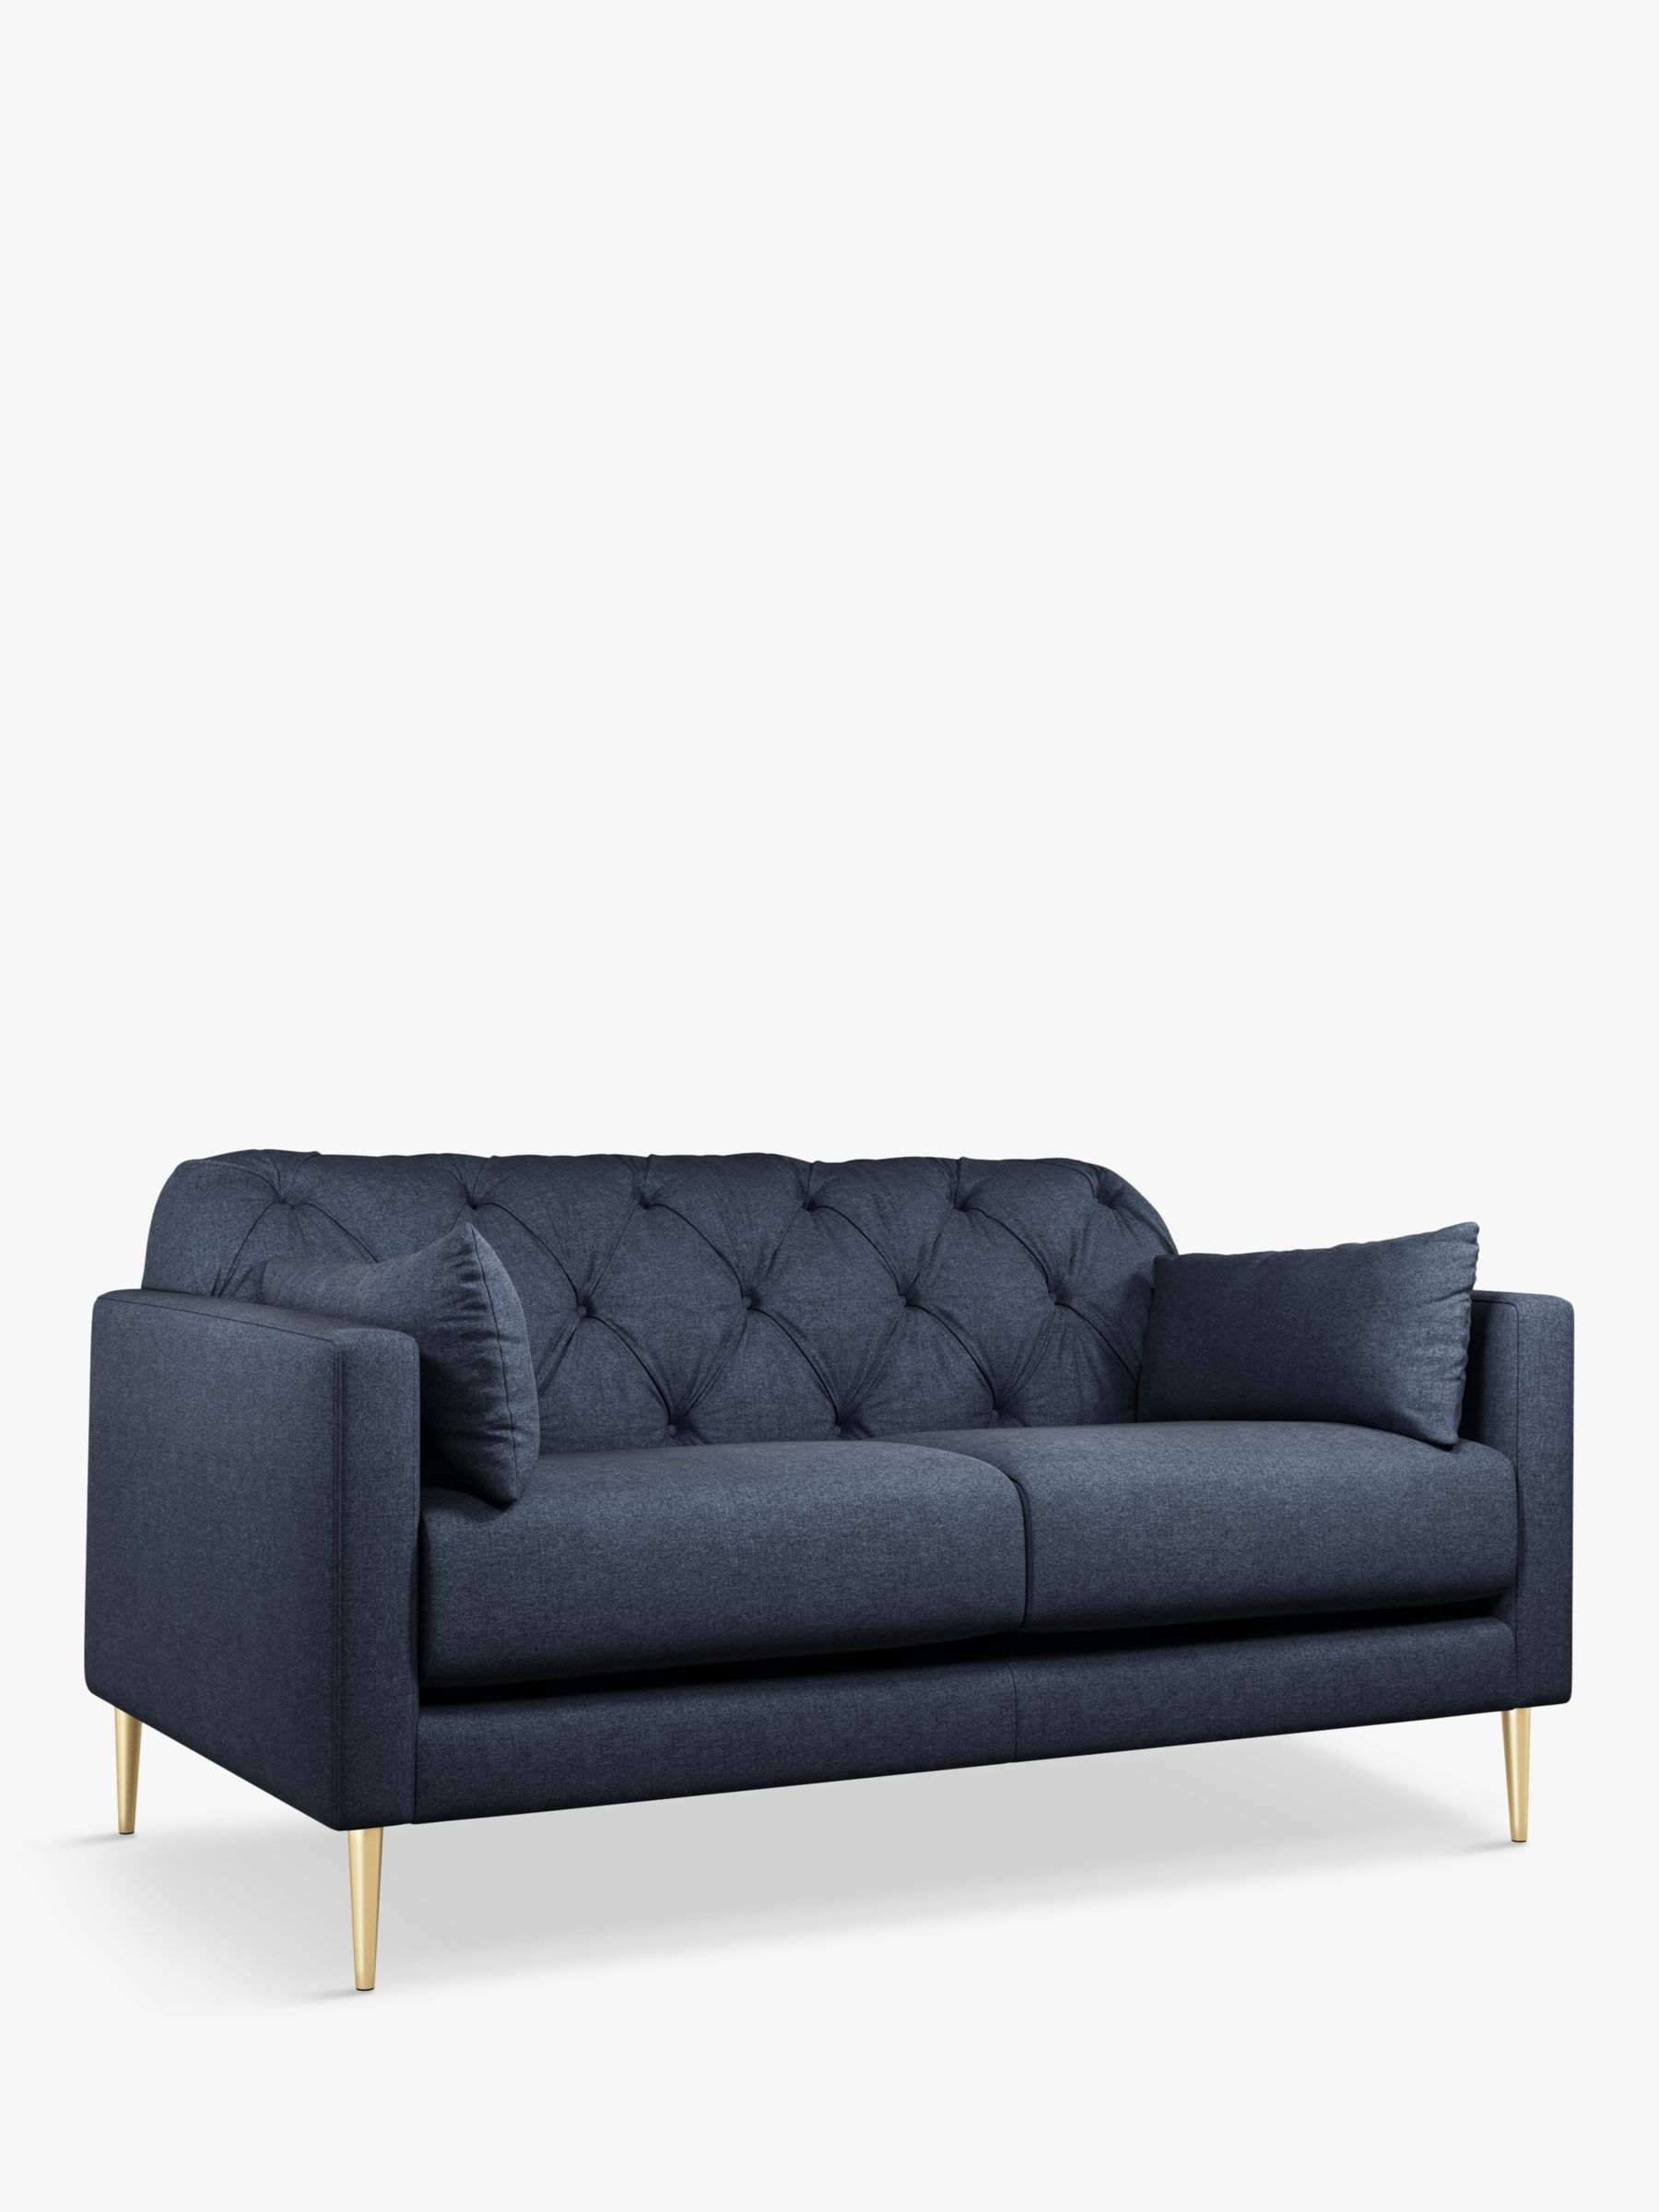 Mendel Range, Swoon Mendel Medium 2 Seater Sofa, Gold Leg, Broadgate Blue Wool